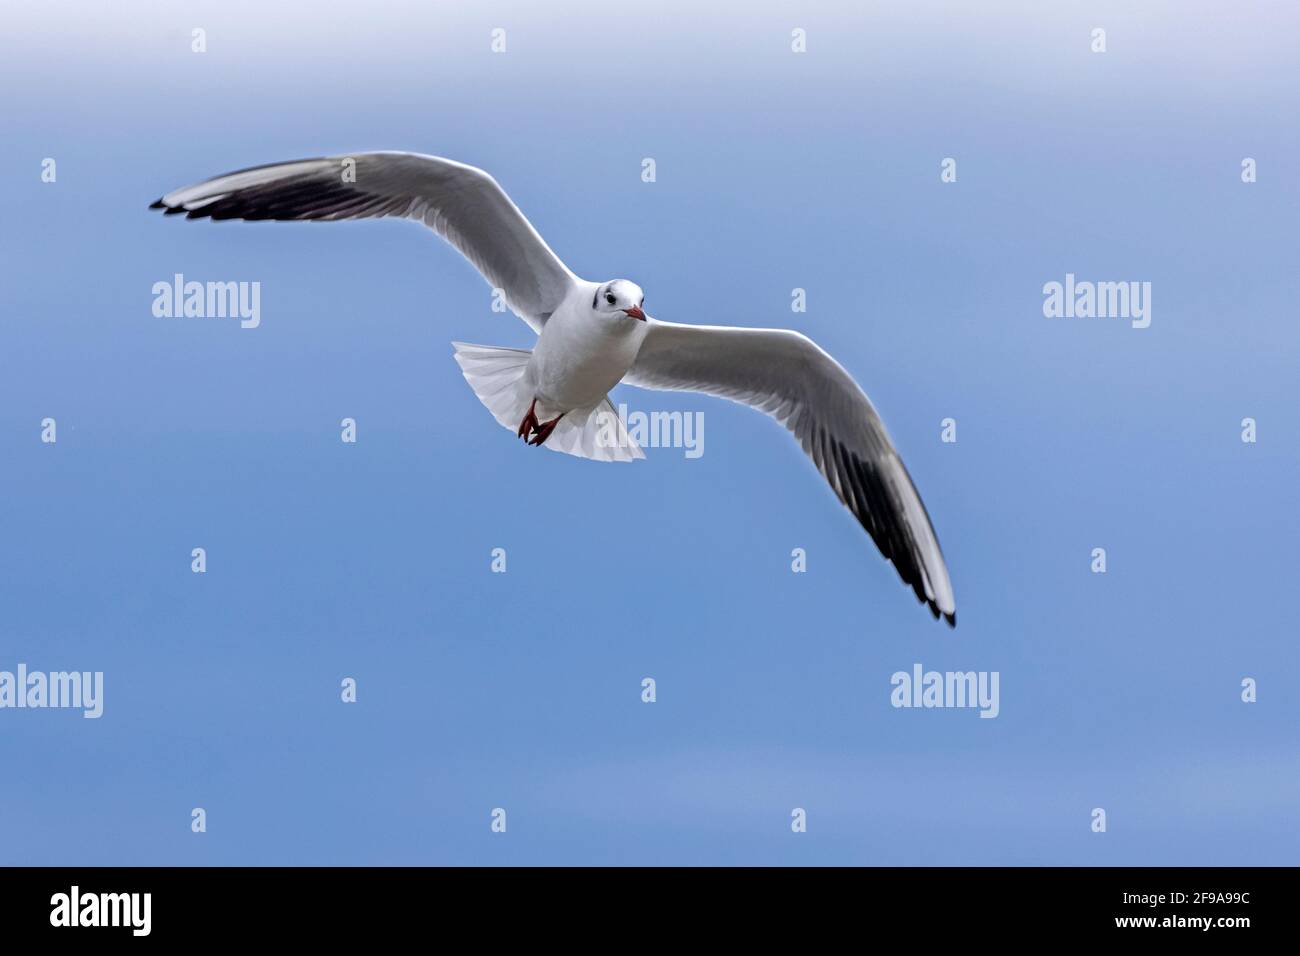 Black-headed gull (Larus ridibundus) in flight, Germany, Stock Photo